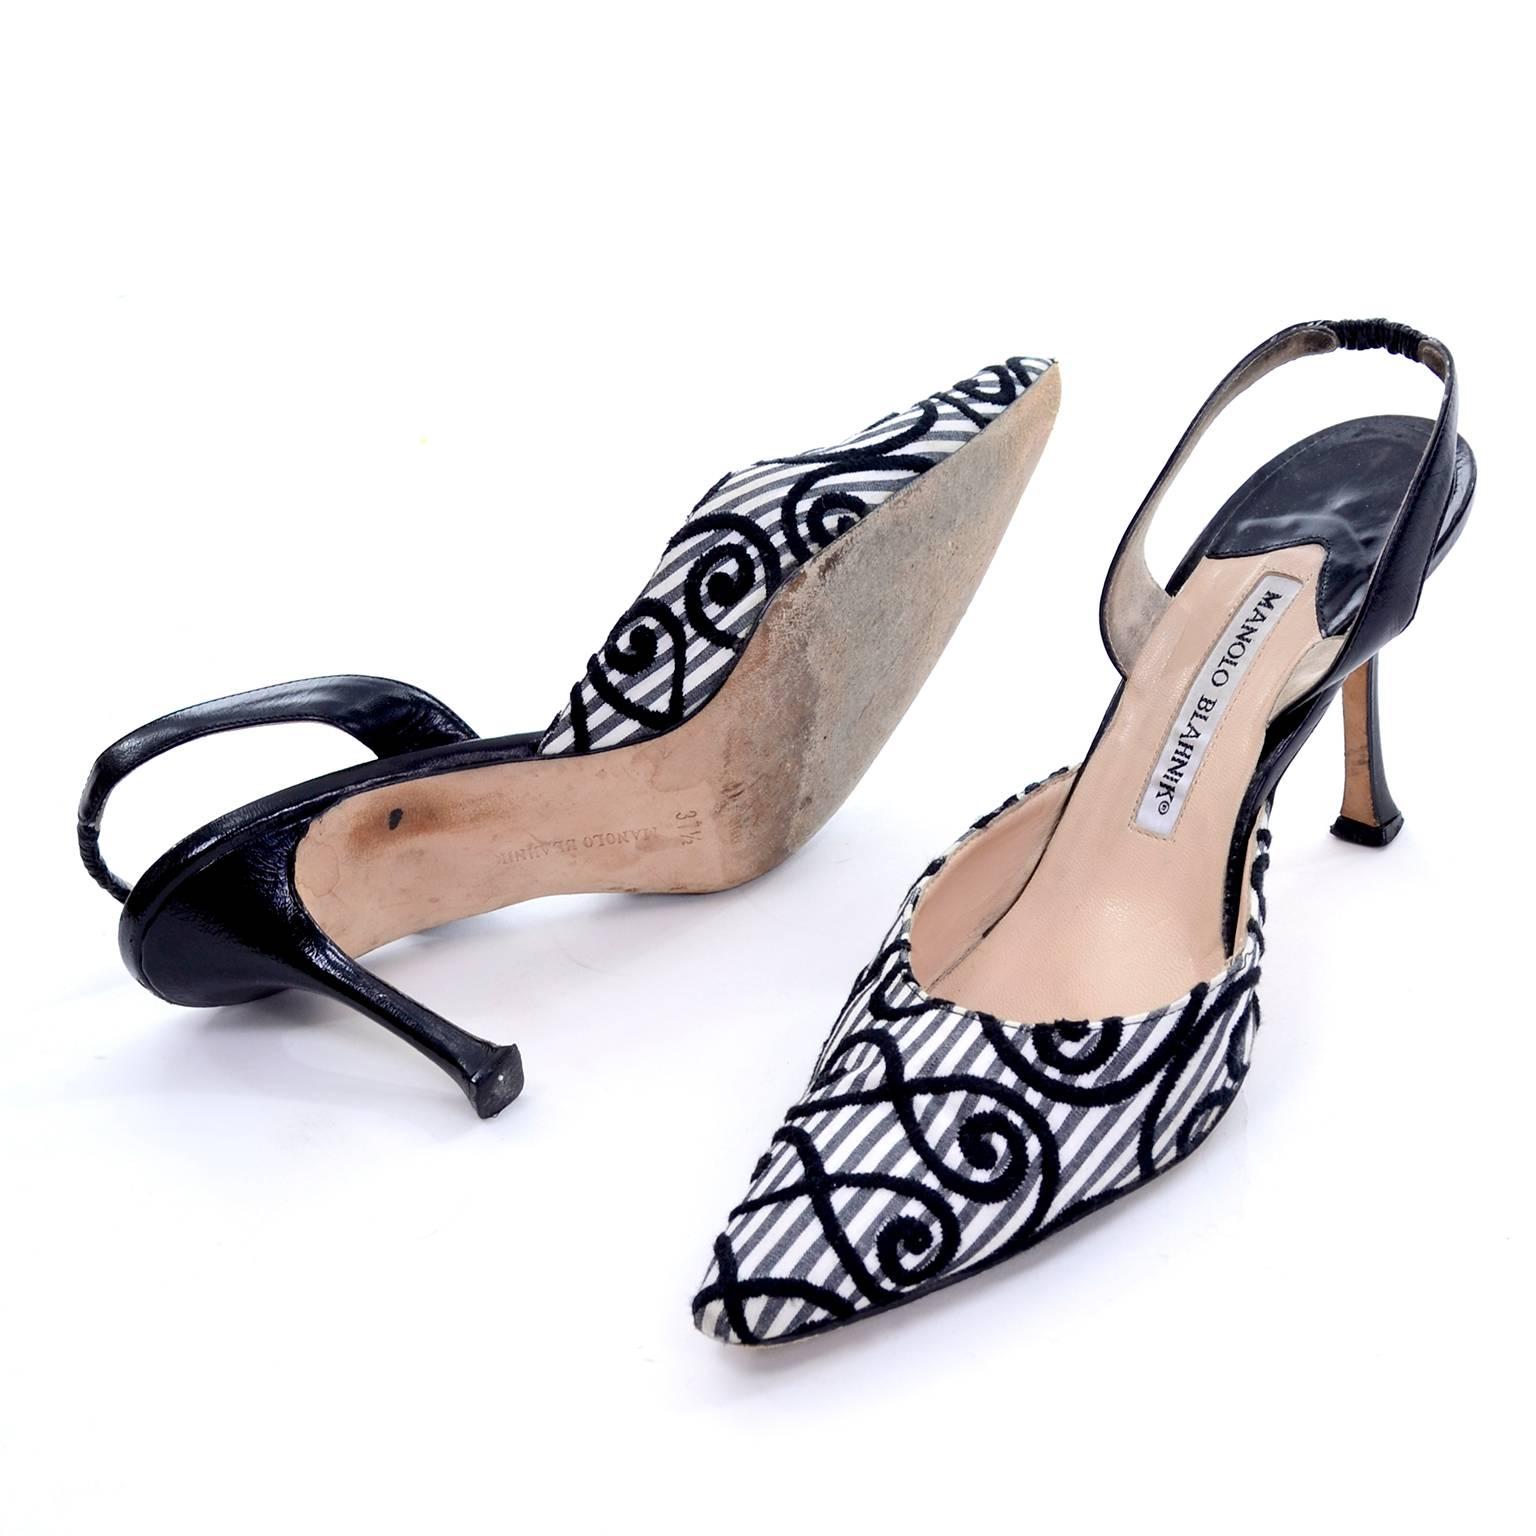 Manolo Blahnik Carolyne Sling Back Shoes in Black and White Swirls Size ...